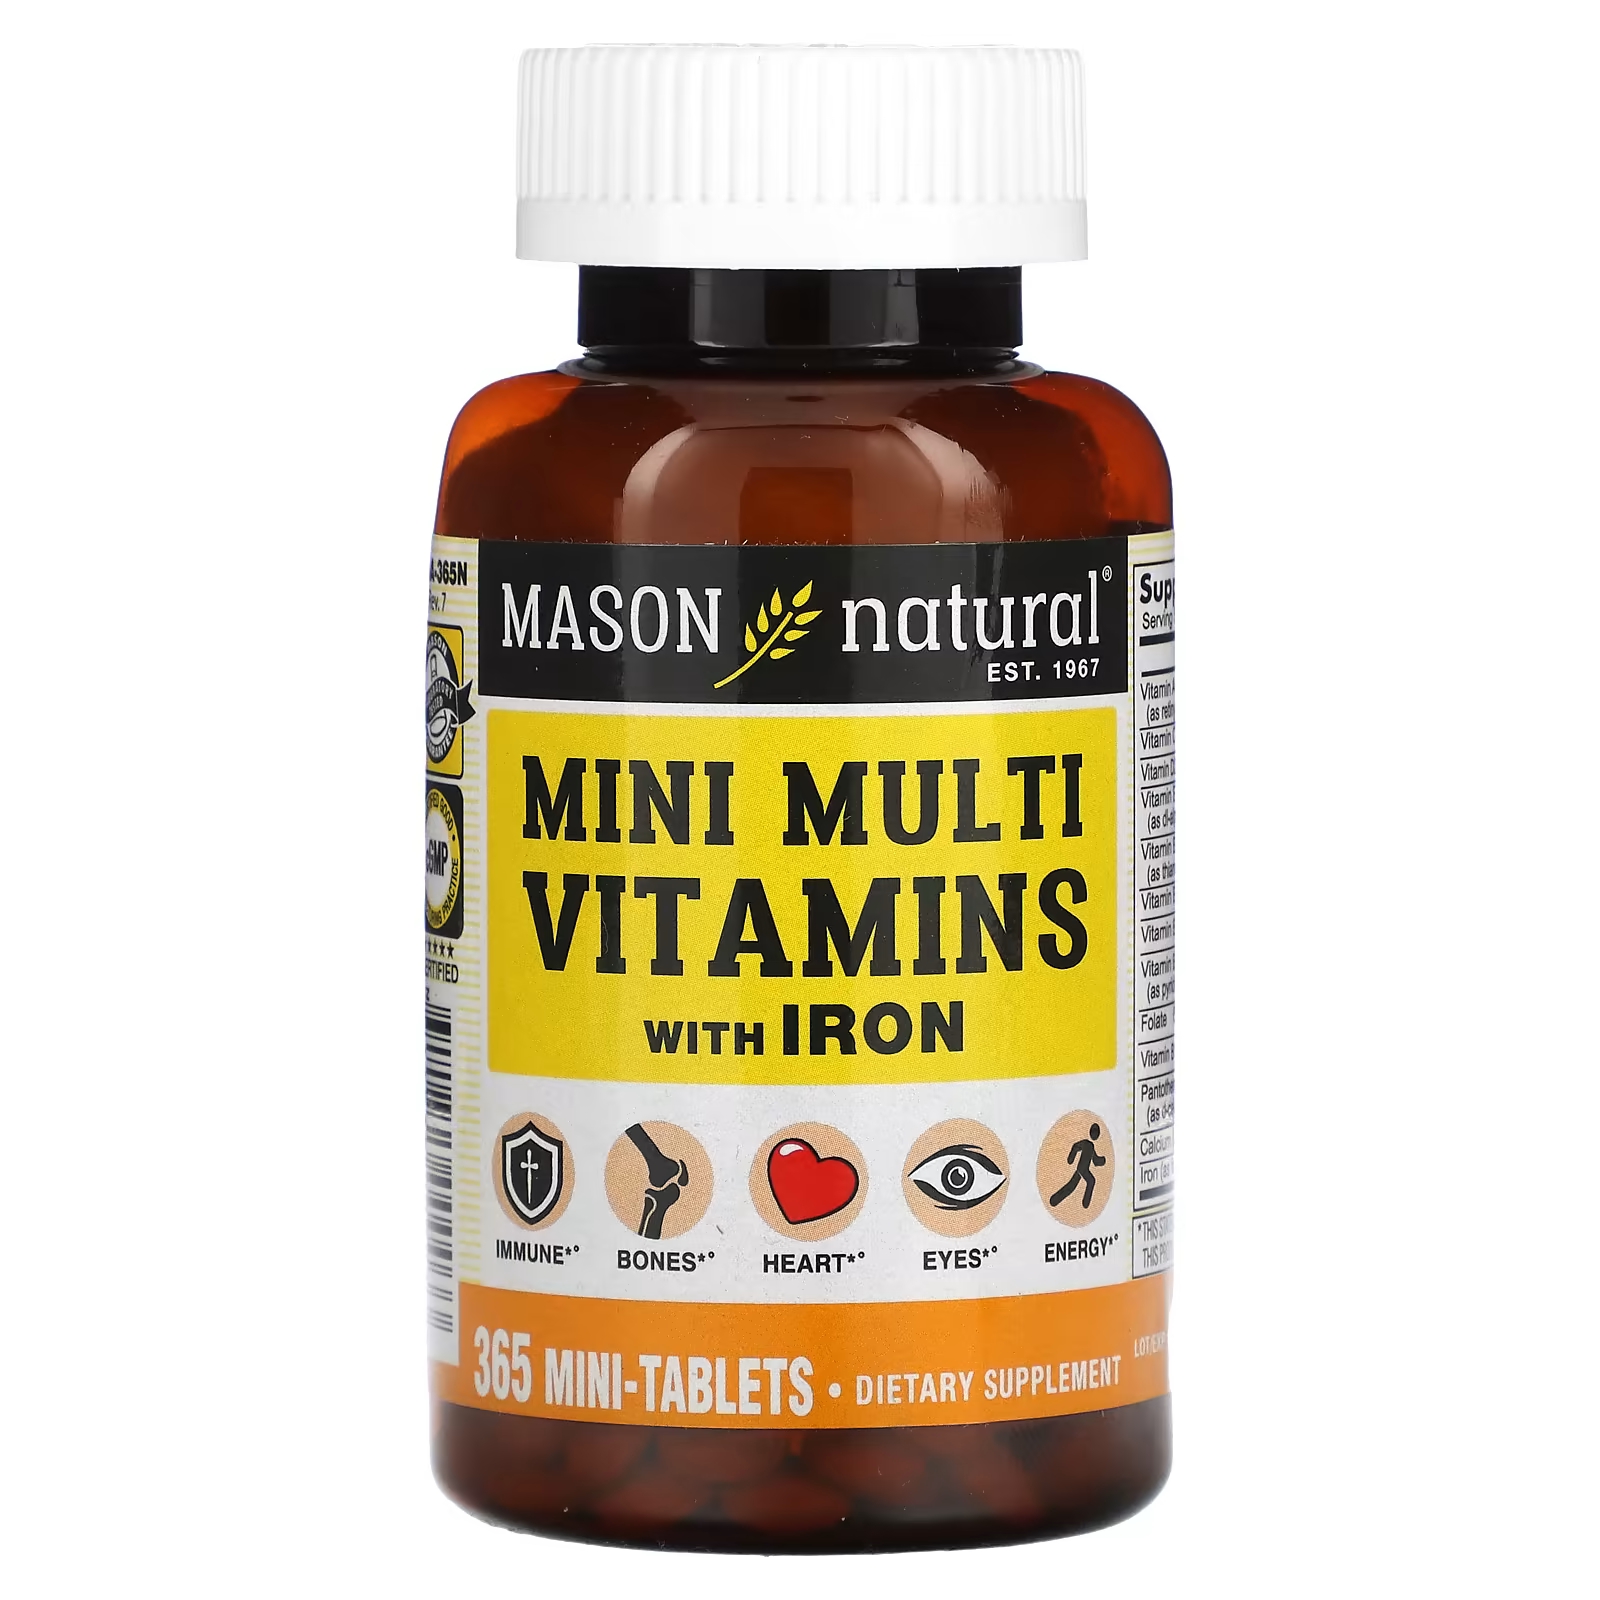 Мультивитамины Mason Natural с железом, 365 мини-таблеток mason natural mini мультивитамины 365 мини таблеток